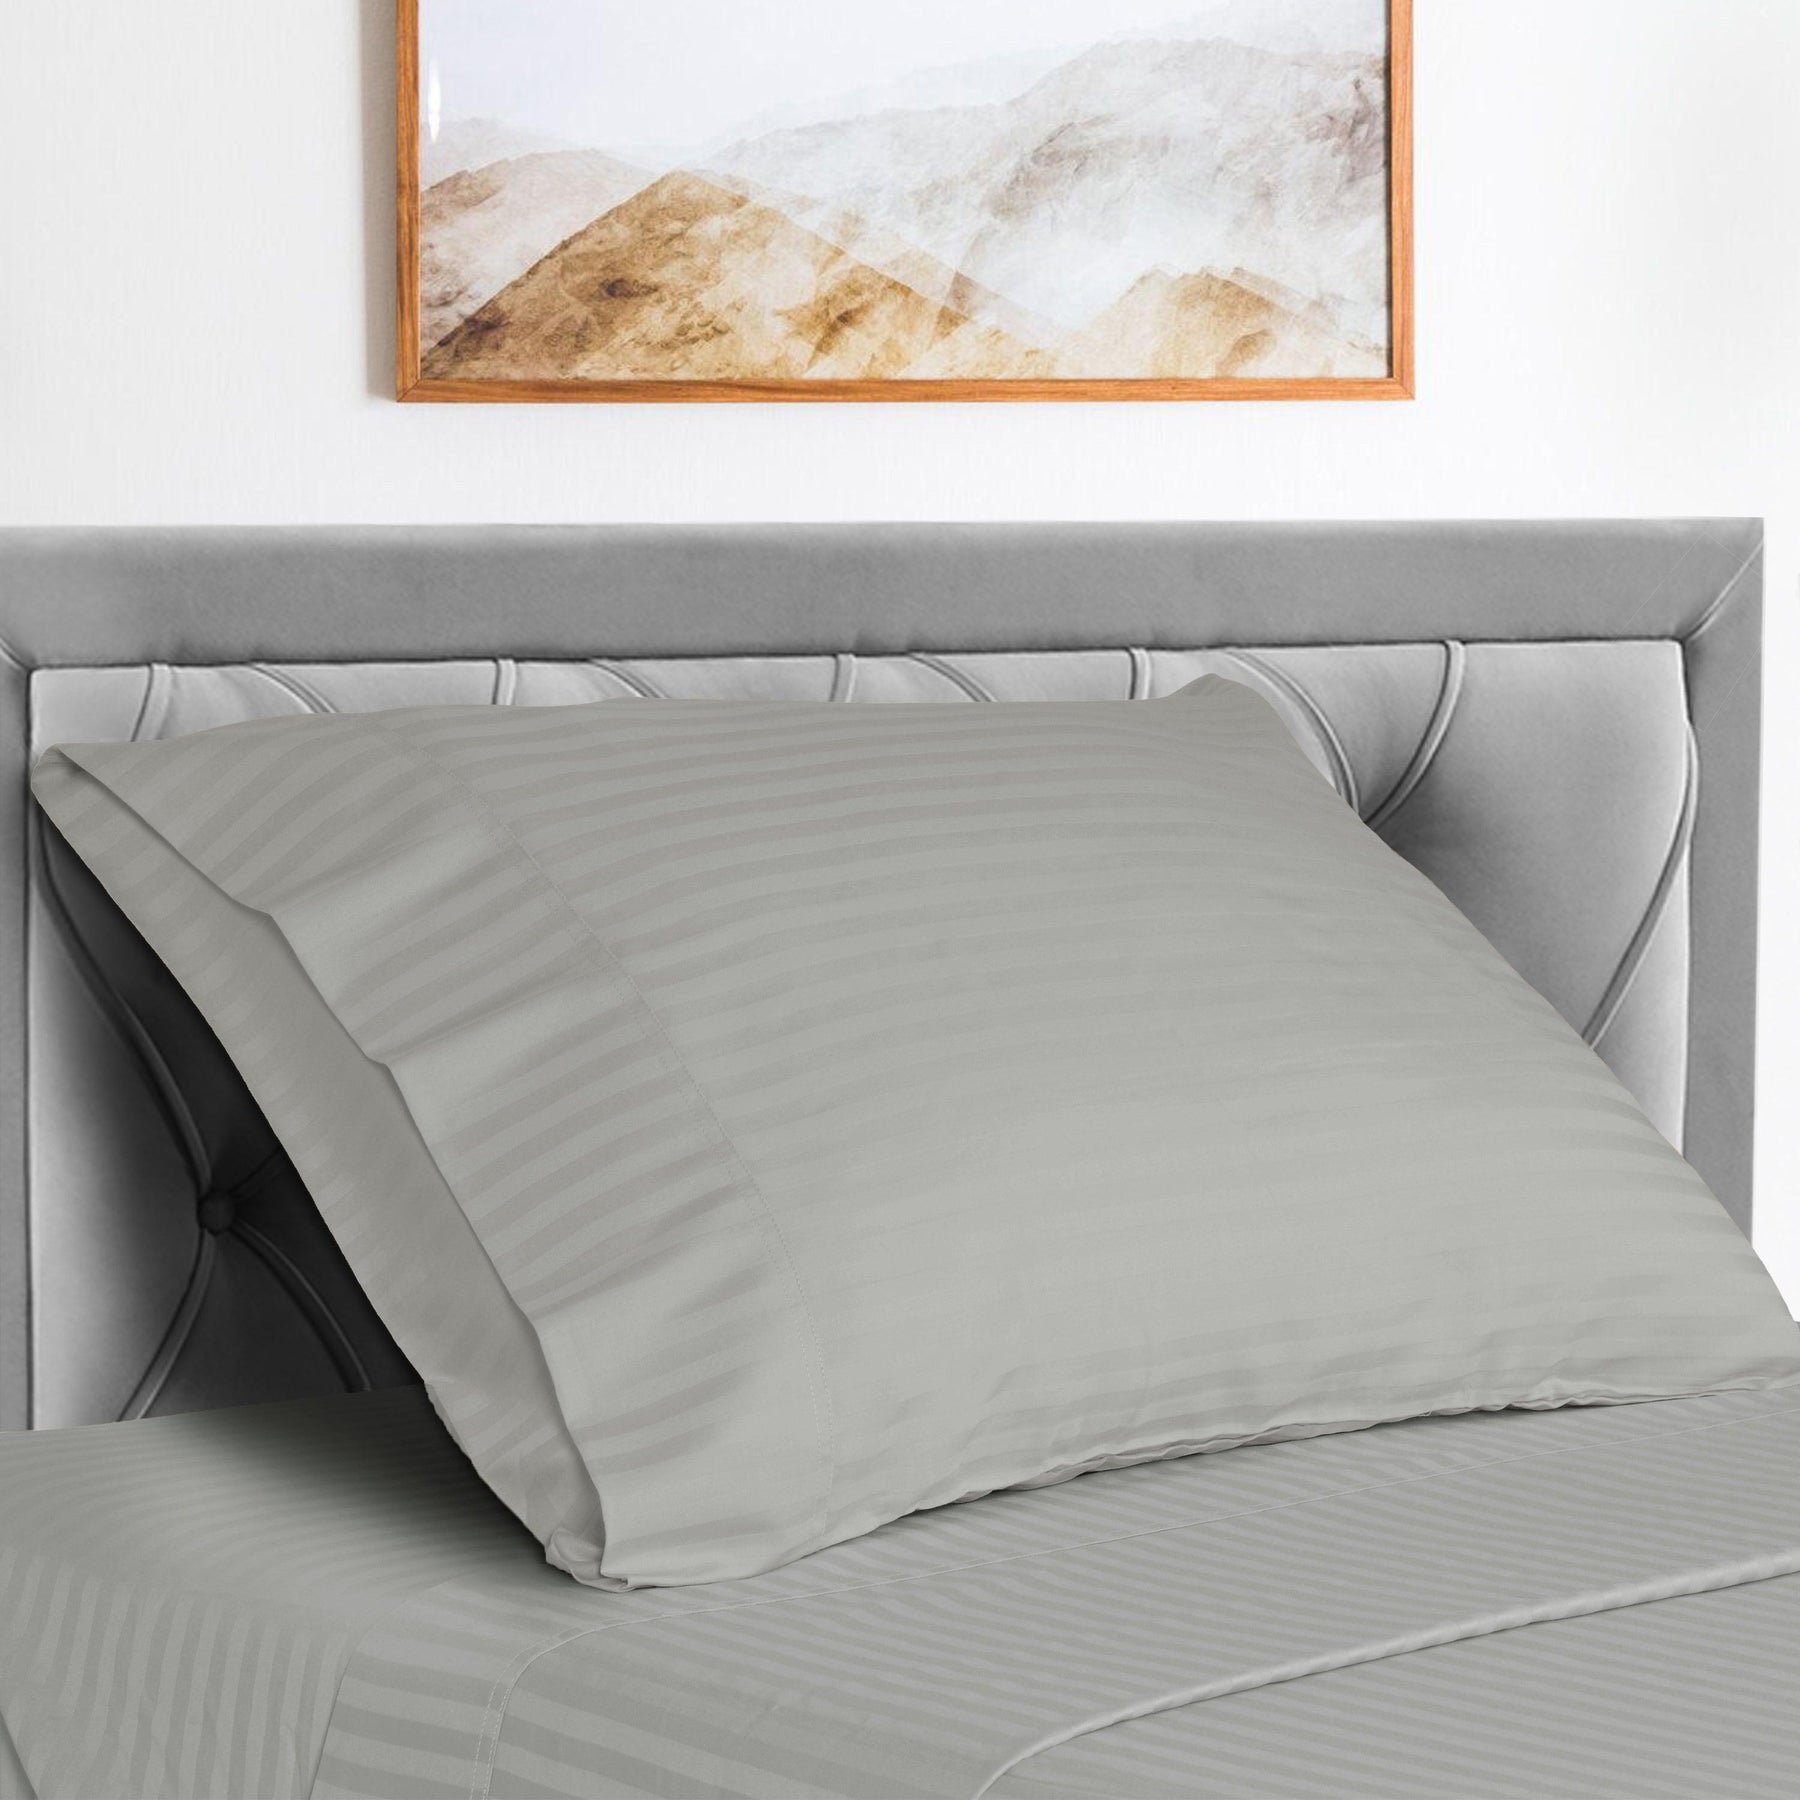  Superior Microfiber Wrinkle Resistant and Breathable Stripe Deep Pocket Bed Sheet Set - Silver